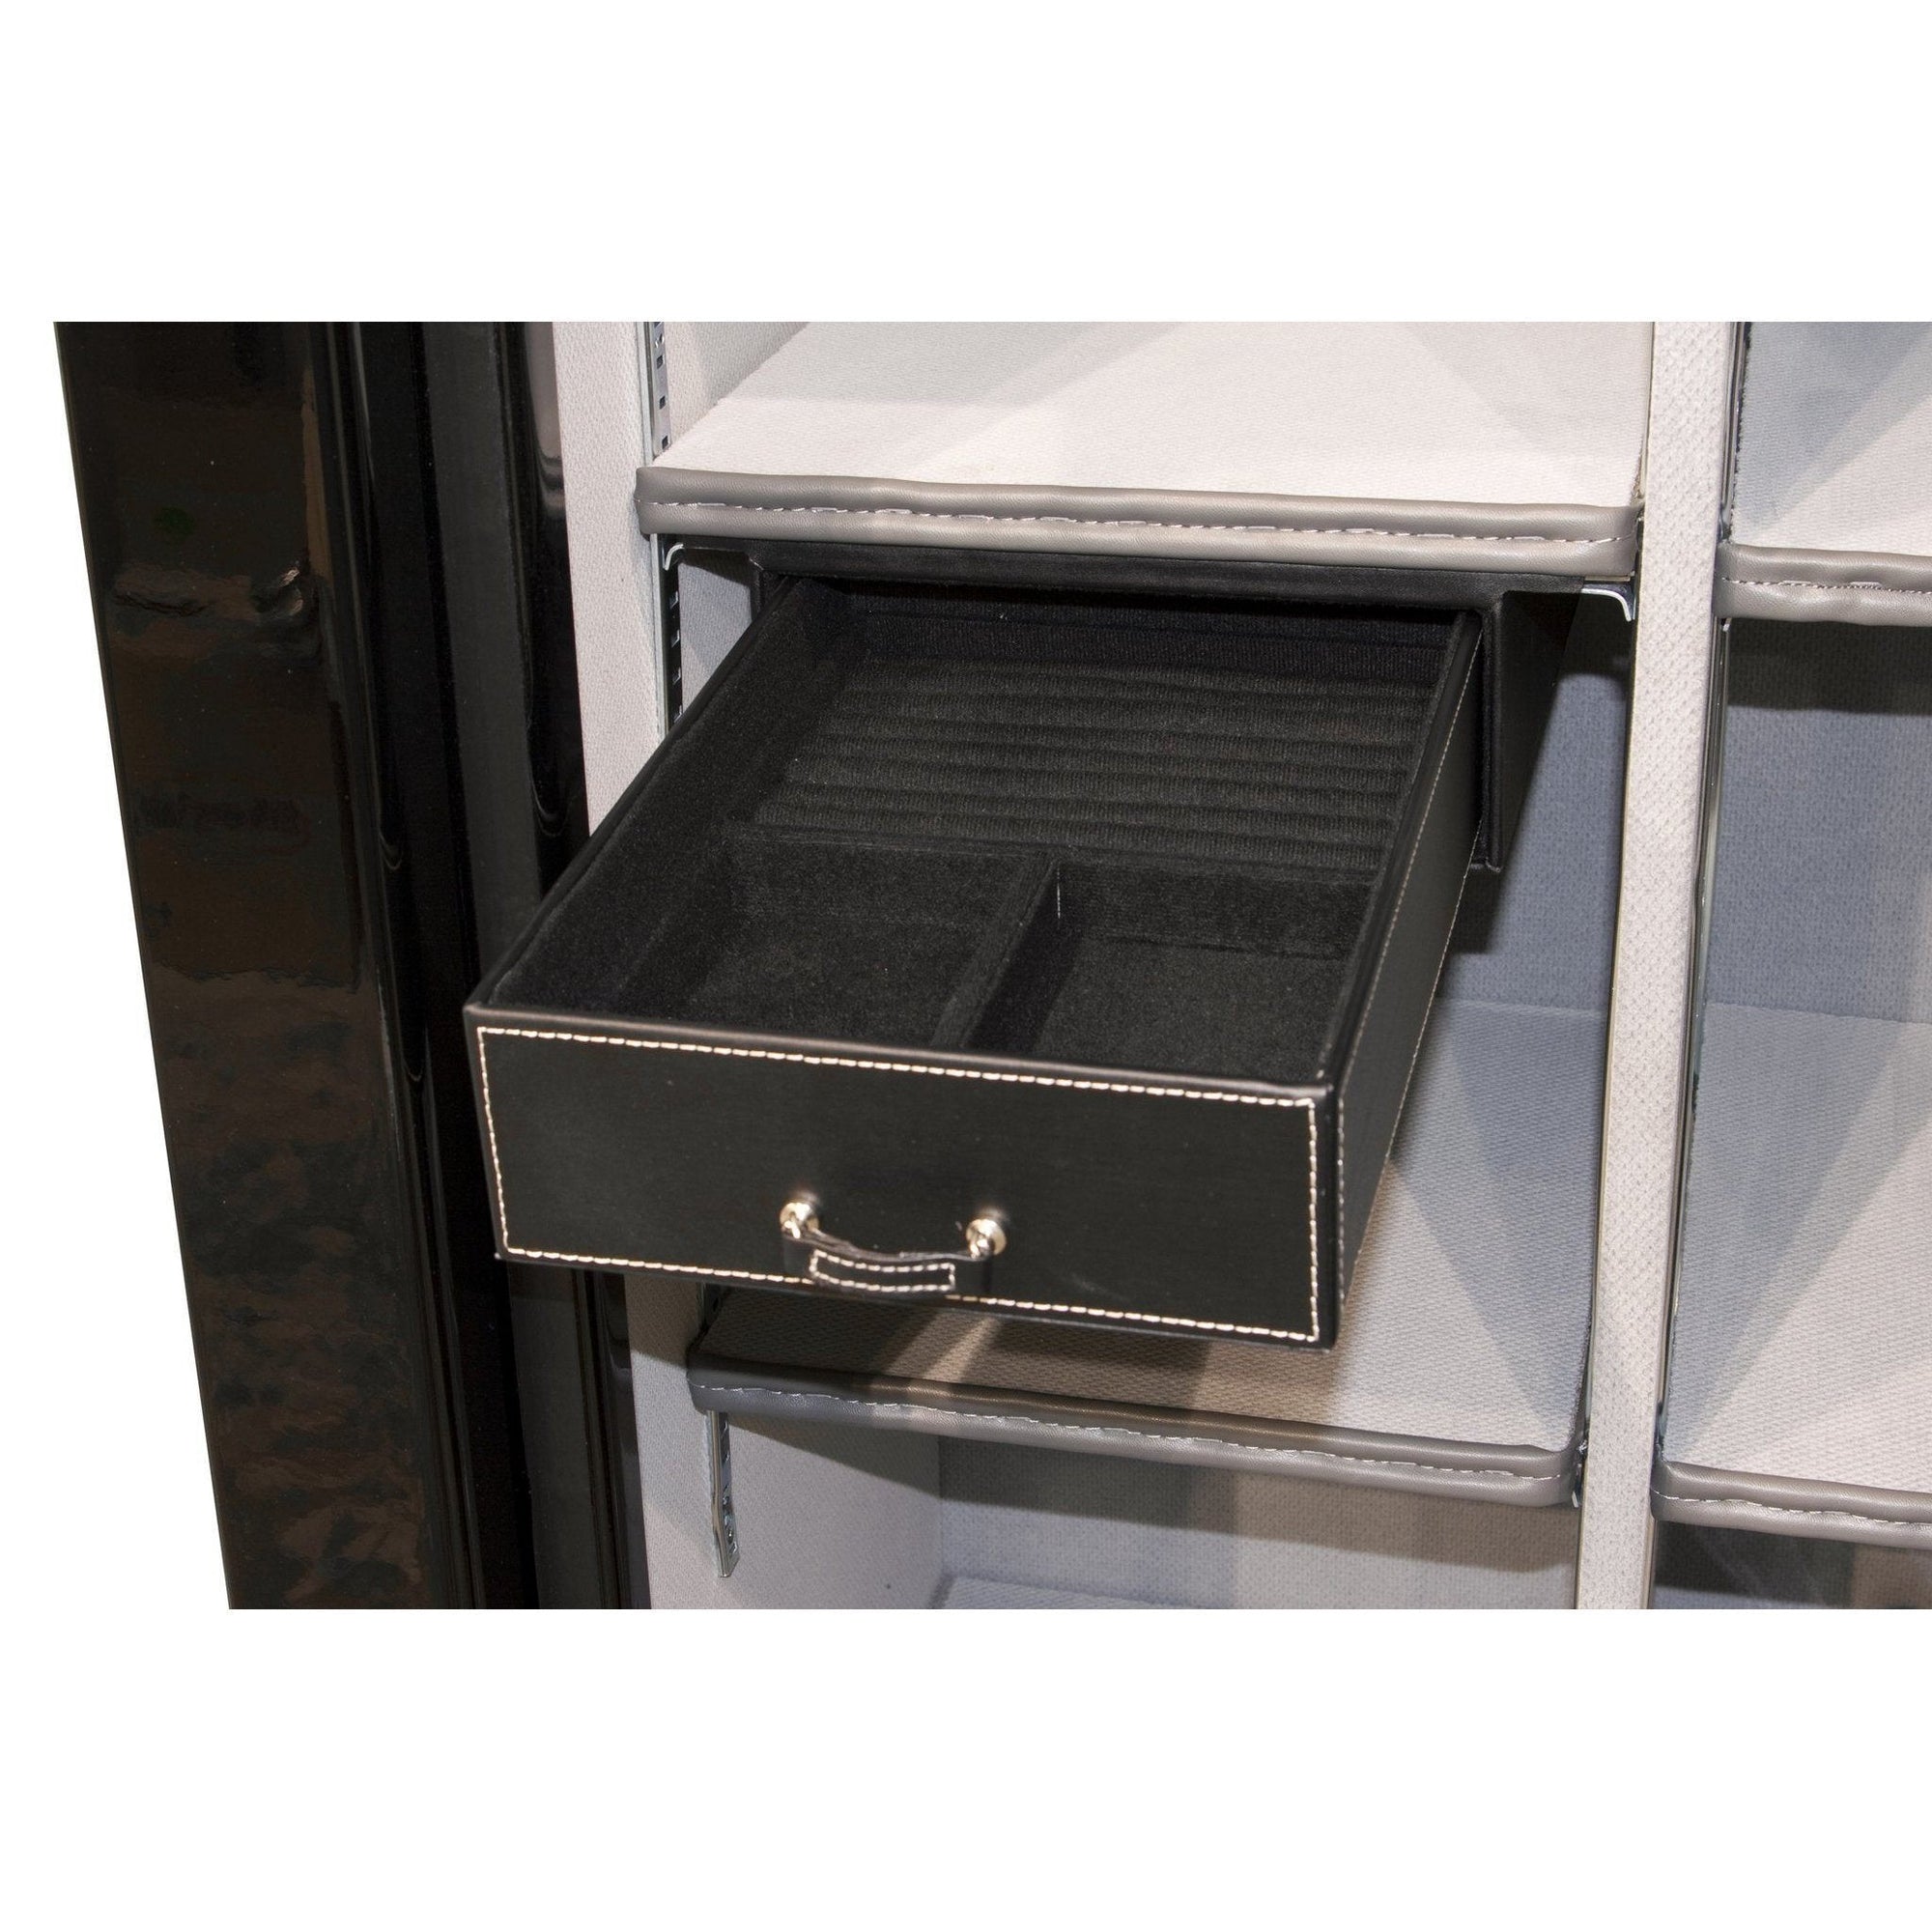 Accessory - storage - jewelry drawer - 8.5 inch - under shelf mount - 23-50 size safes - MODLOCK